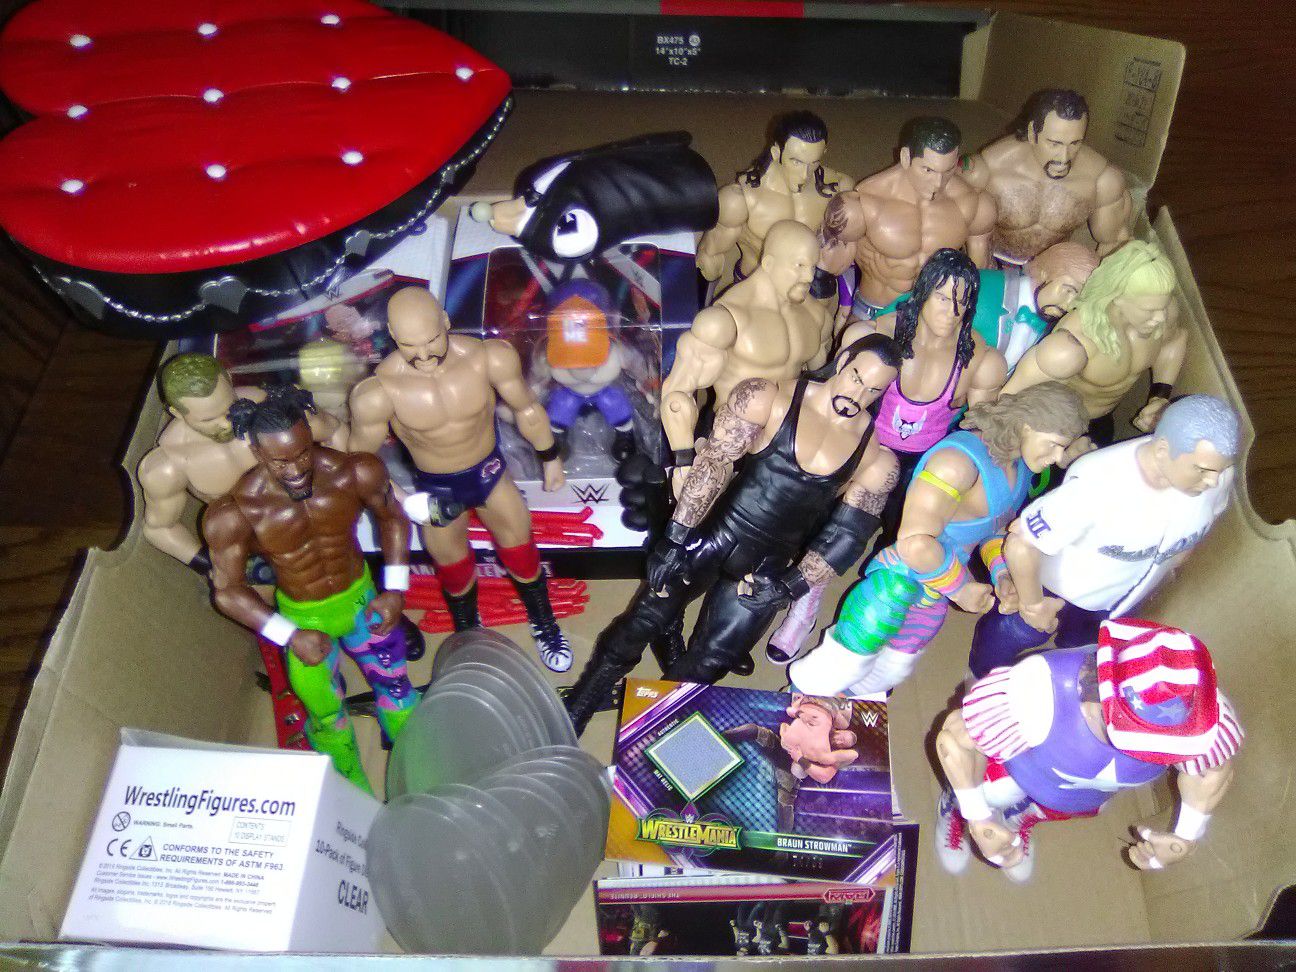 Box O' WWE figures